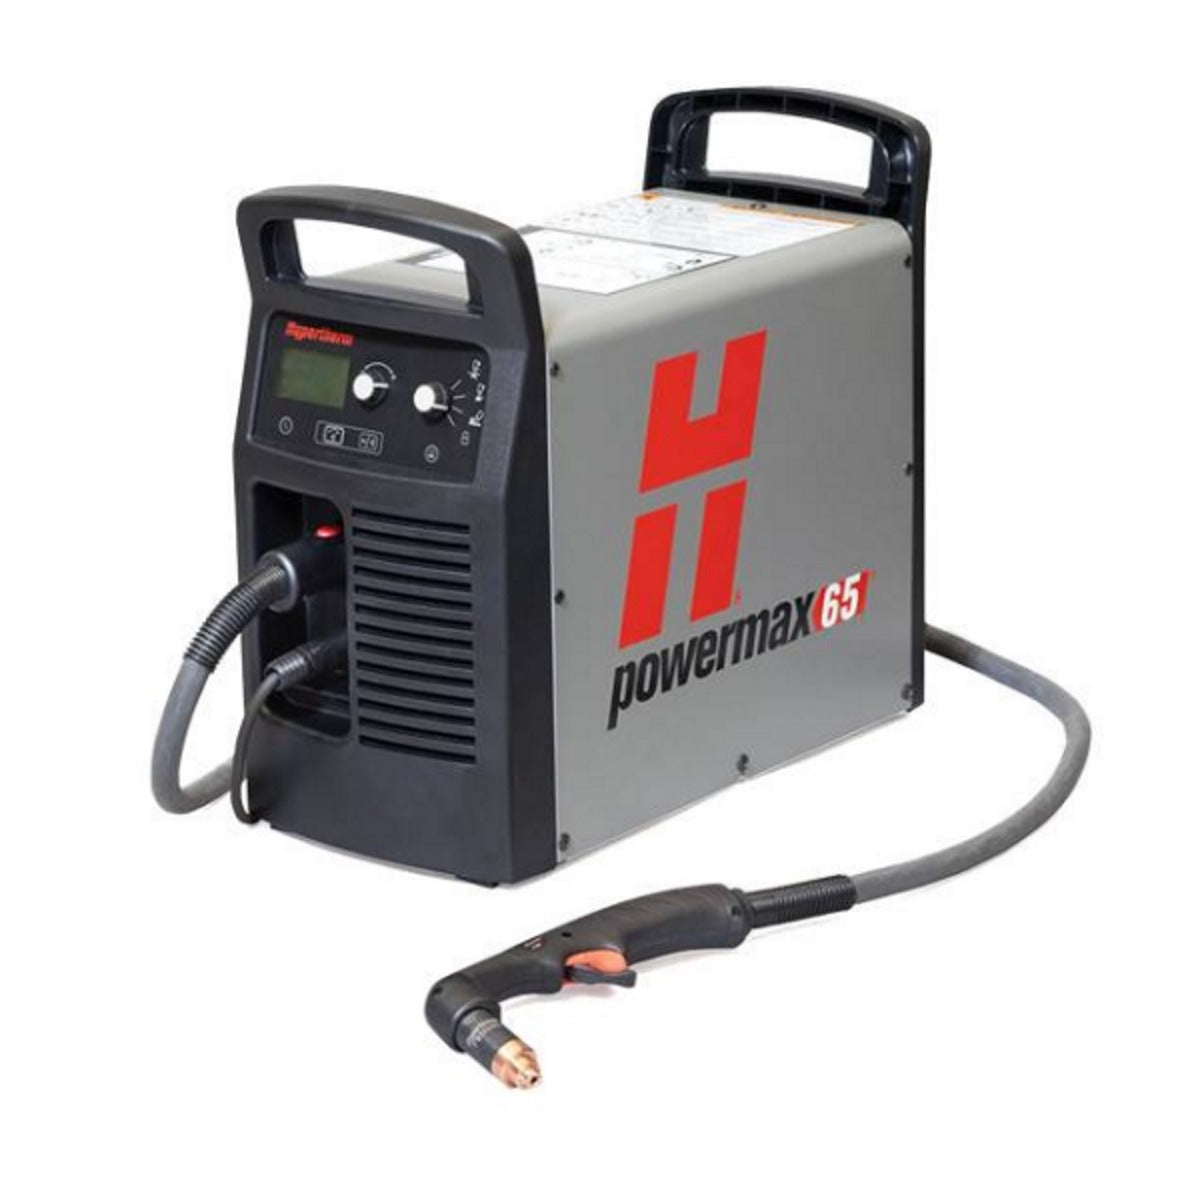 Hypertherm Powermax 65 w/CPC 25ft Mech and Hand Torch Pkg (083300)